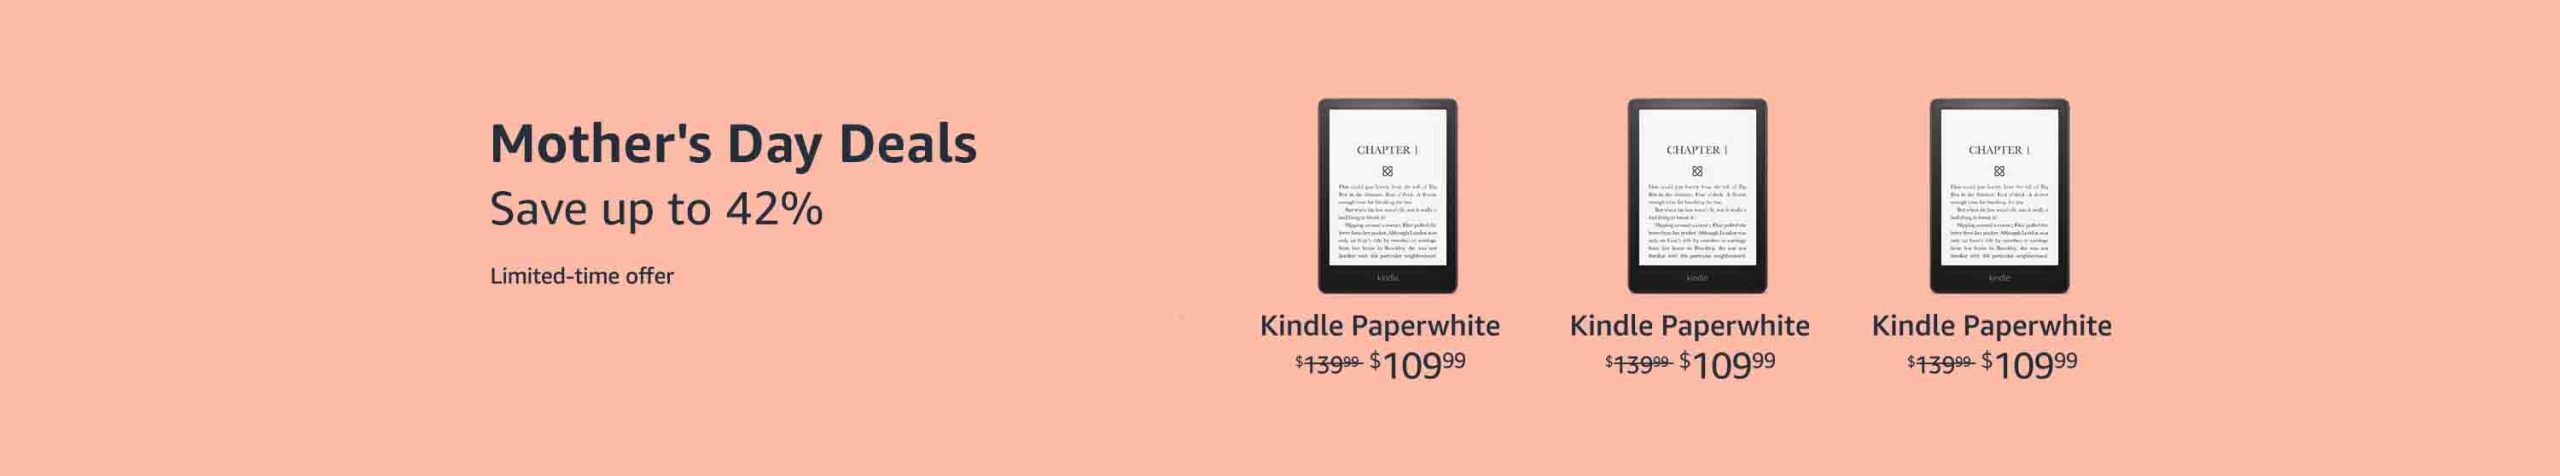 Kindle Paperwhite 